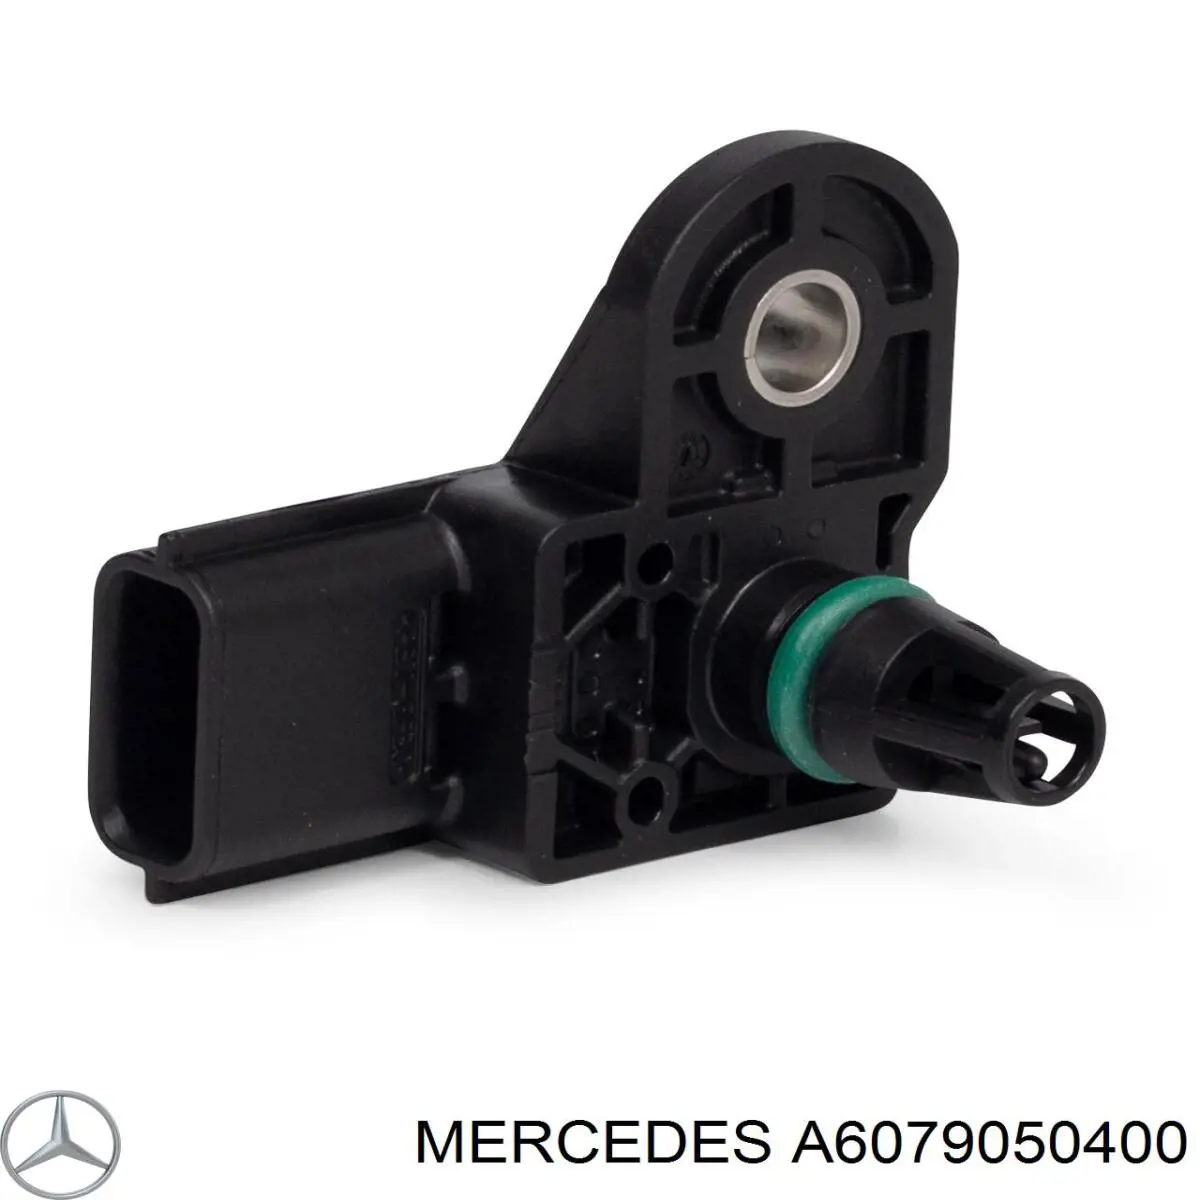 A6079050400 Mercedes датчик давления во впускном коллекторе, map